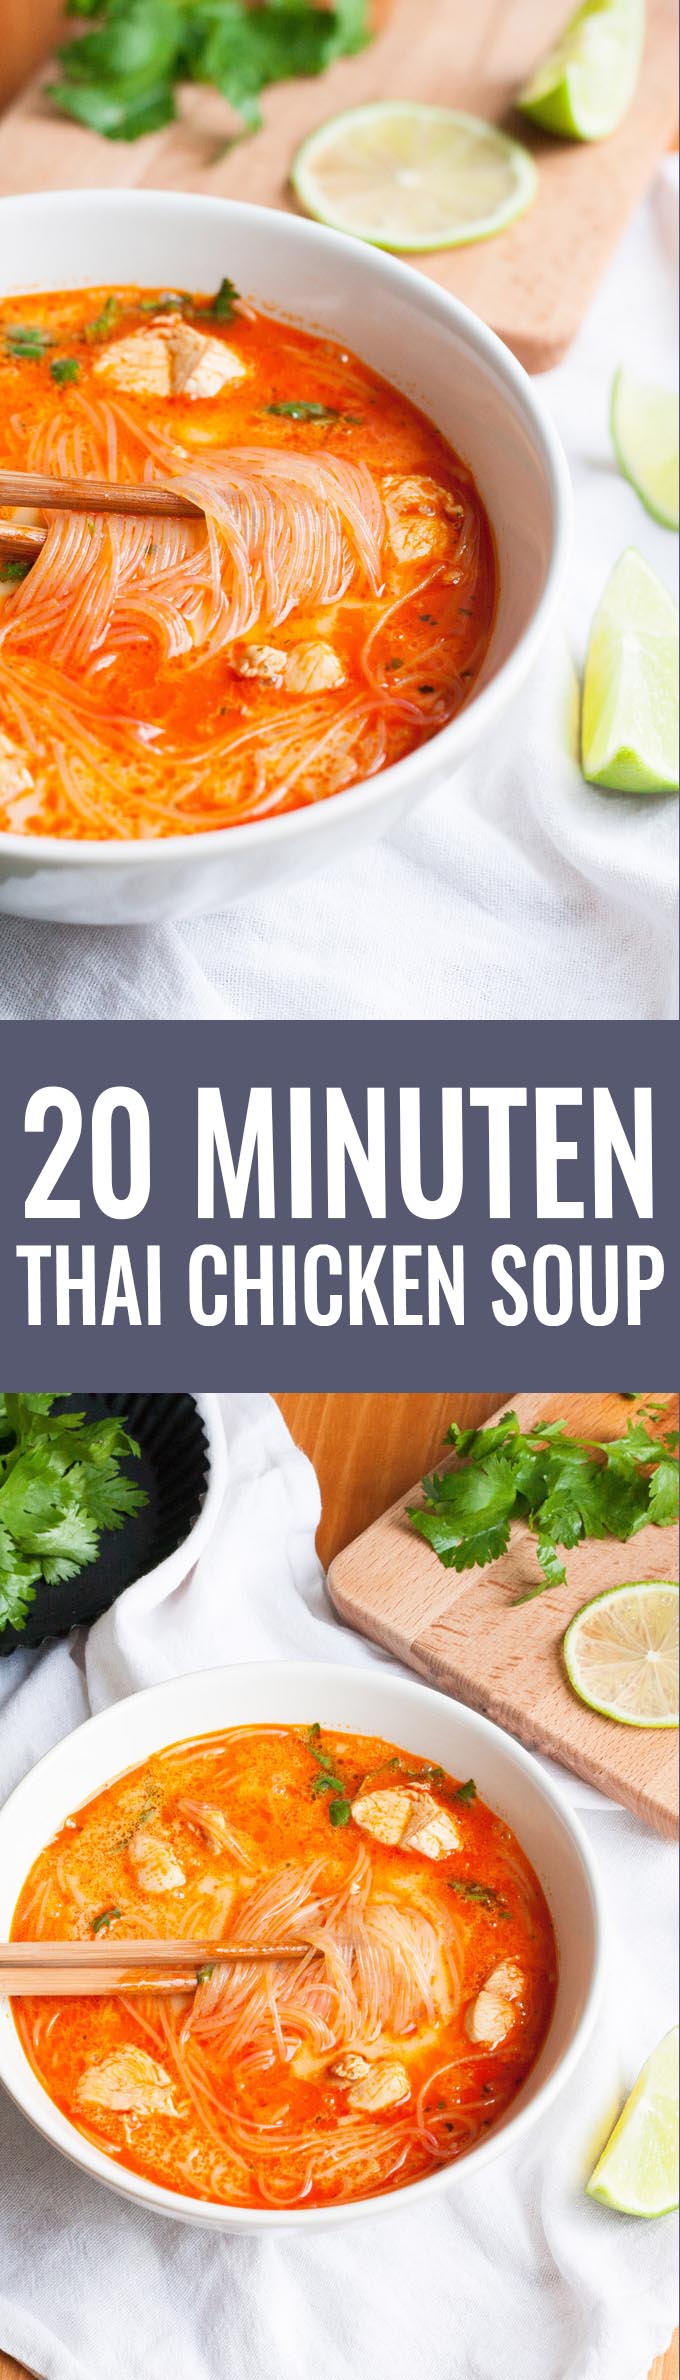 20 Minuten Thai Chicken Soup - Kochkarussell.com